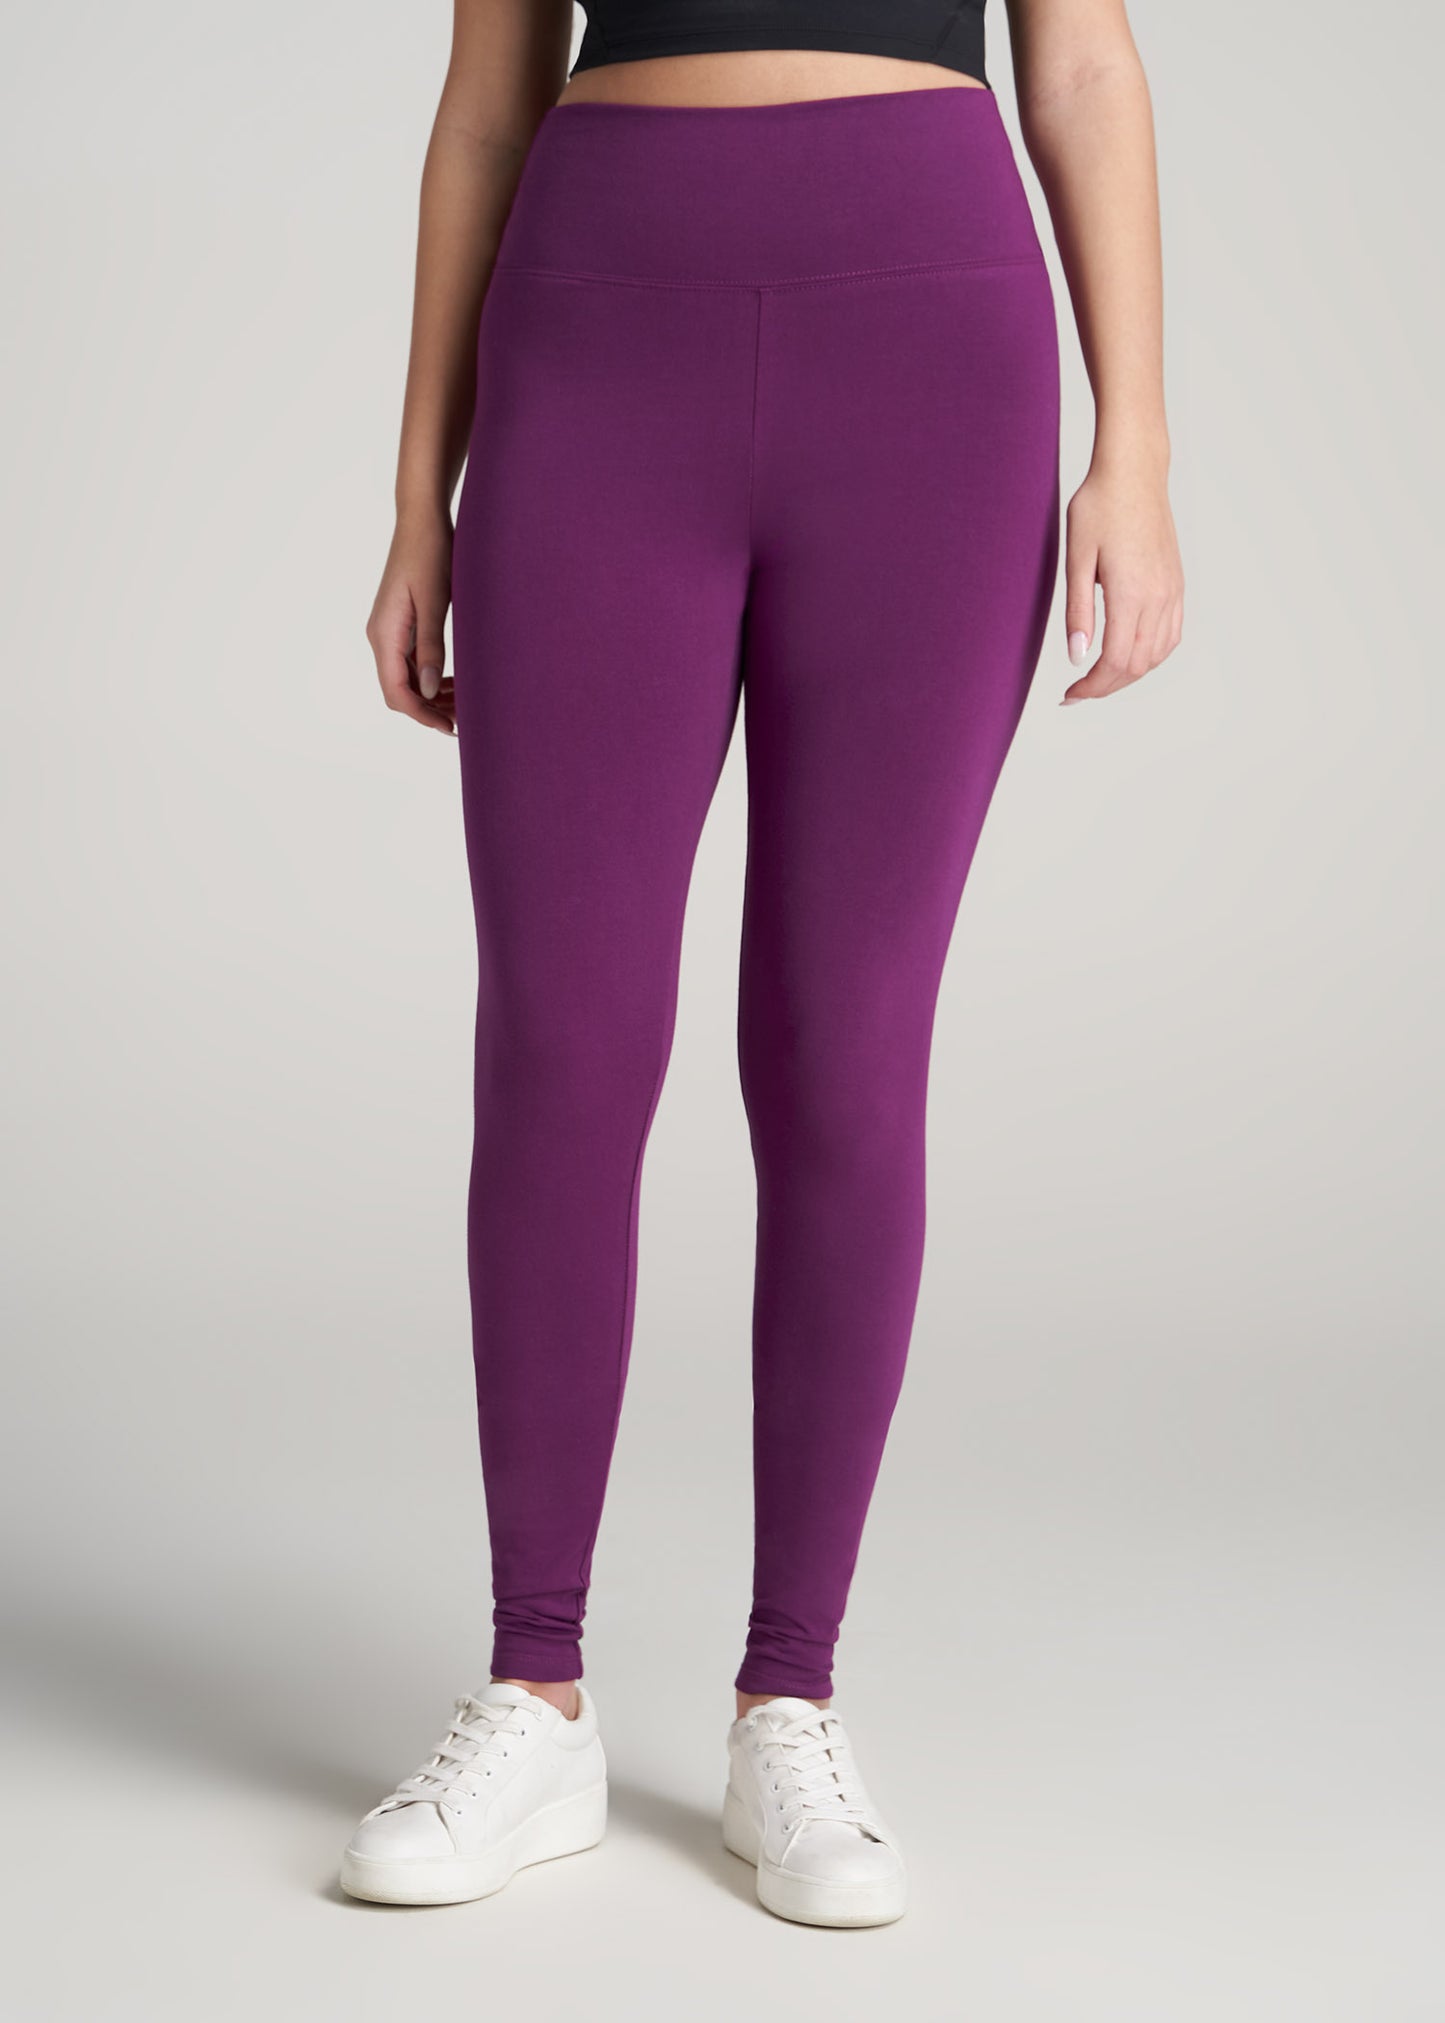 Soft Surroundings, Pants & Jumpsuits, Soft Surroundings Purple High Rise Leggings  Womens Size Xl Tall